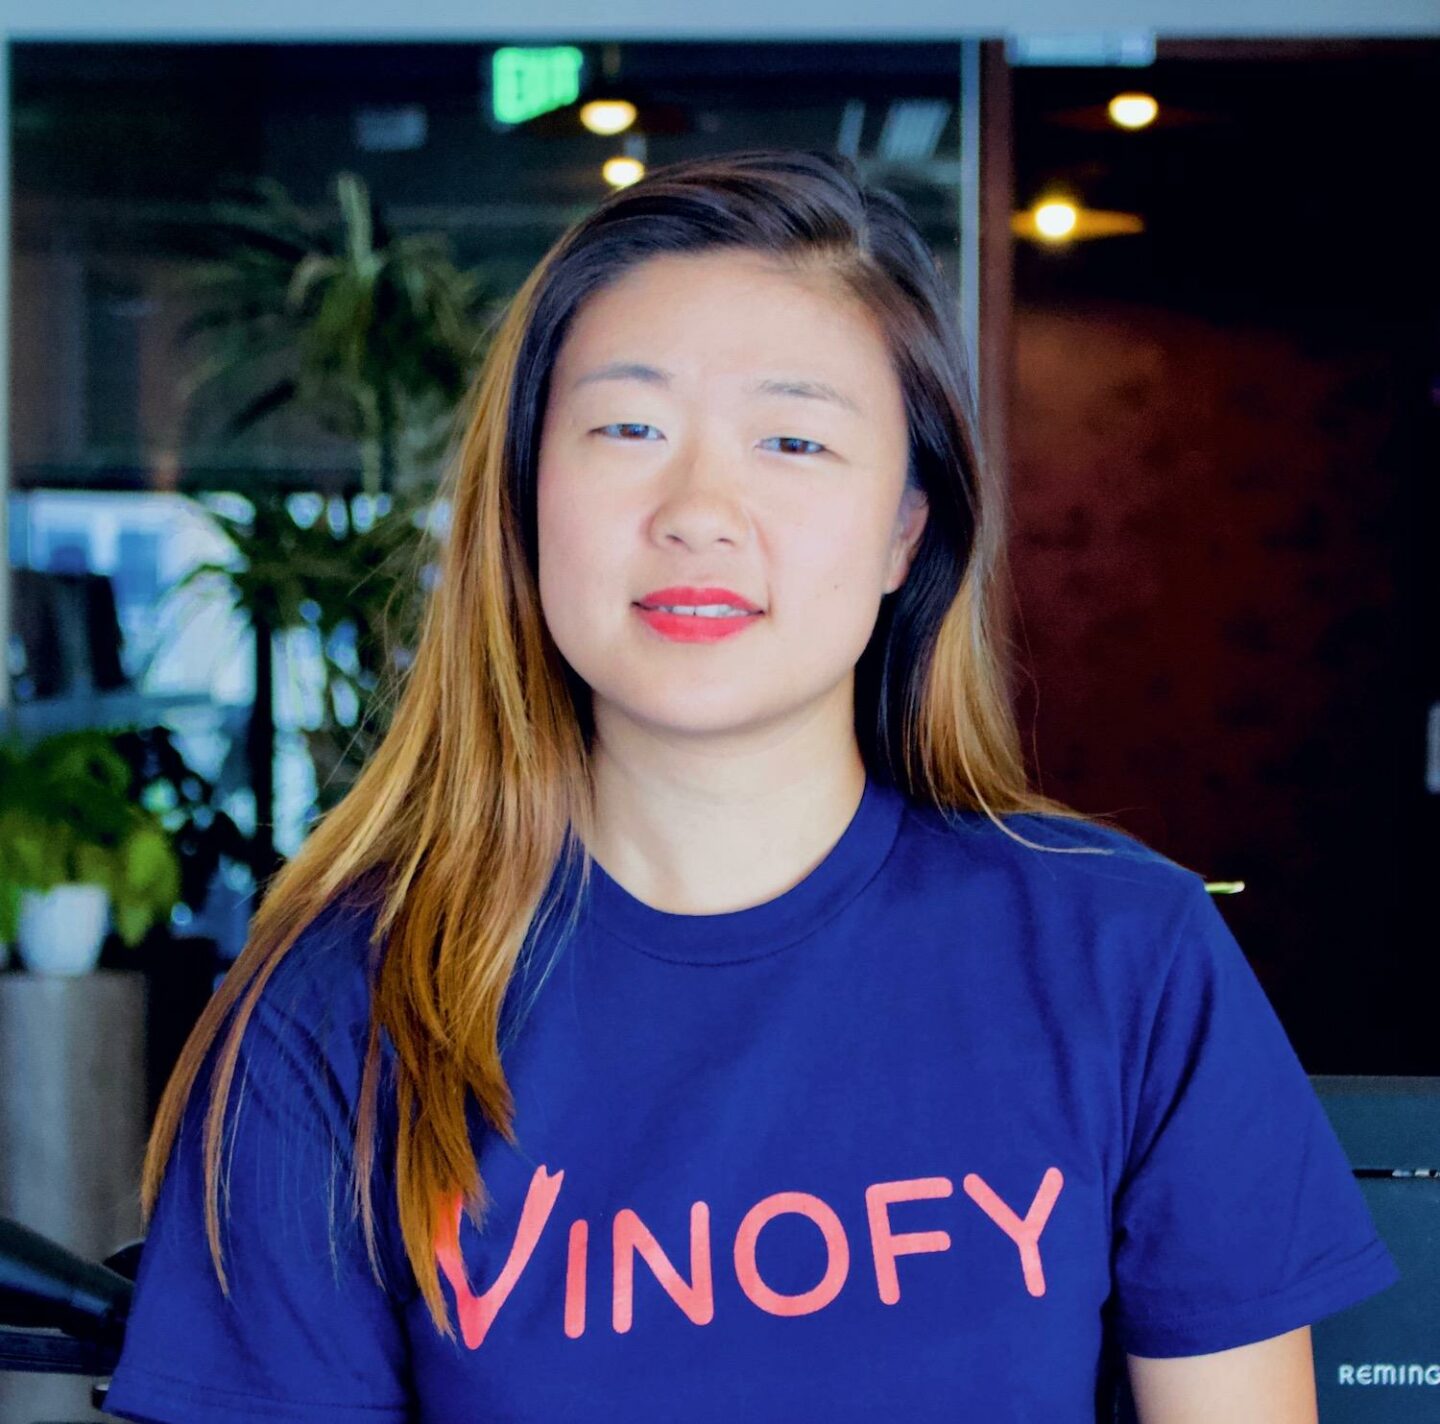 Ellen, the founder of the Vinofy app